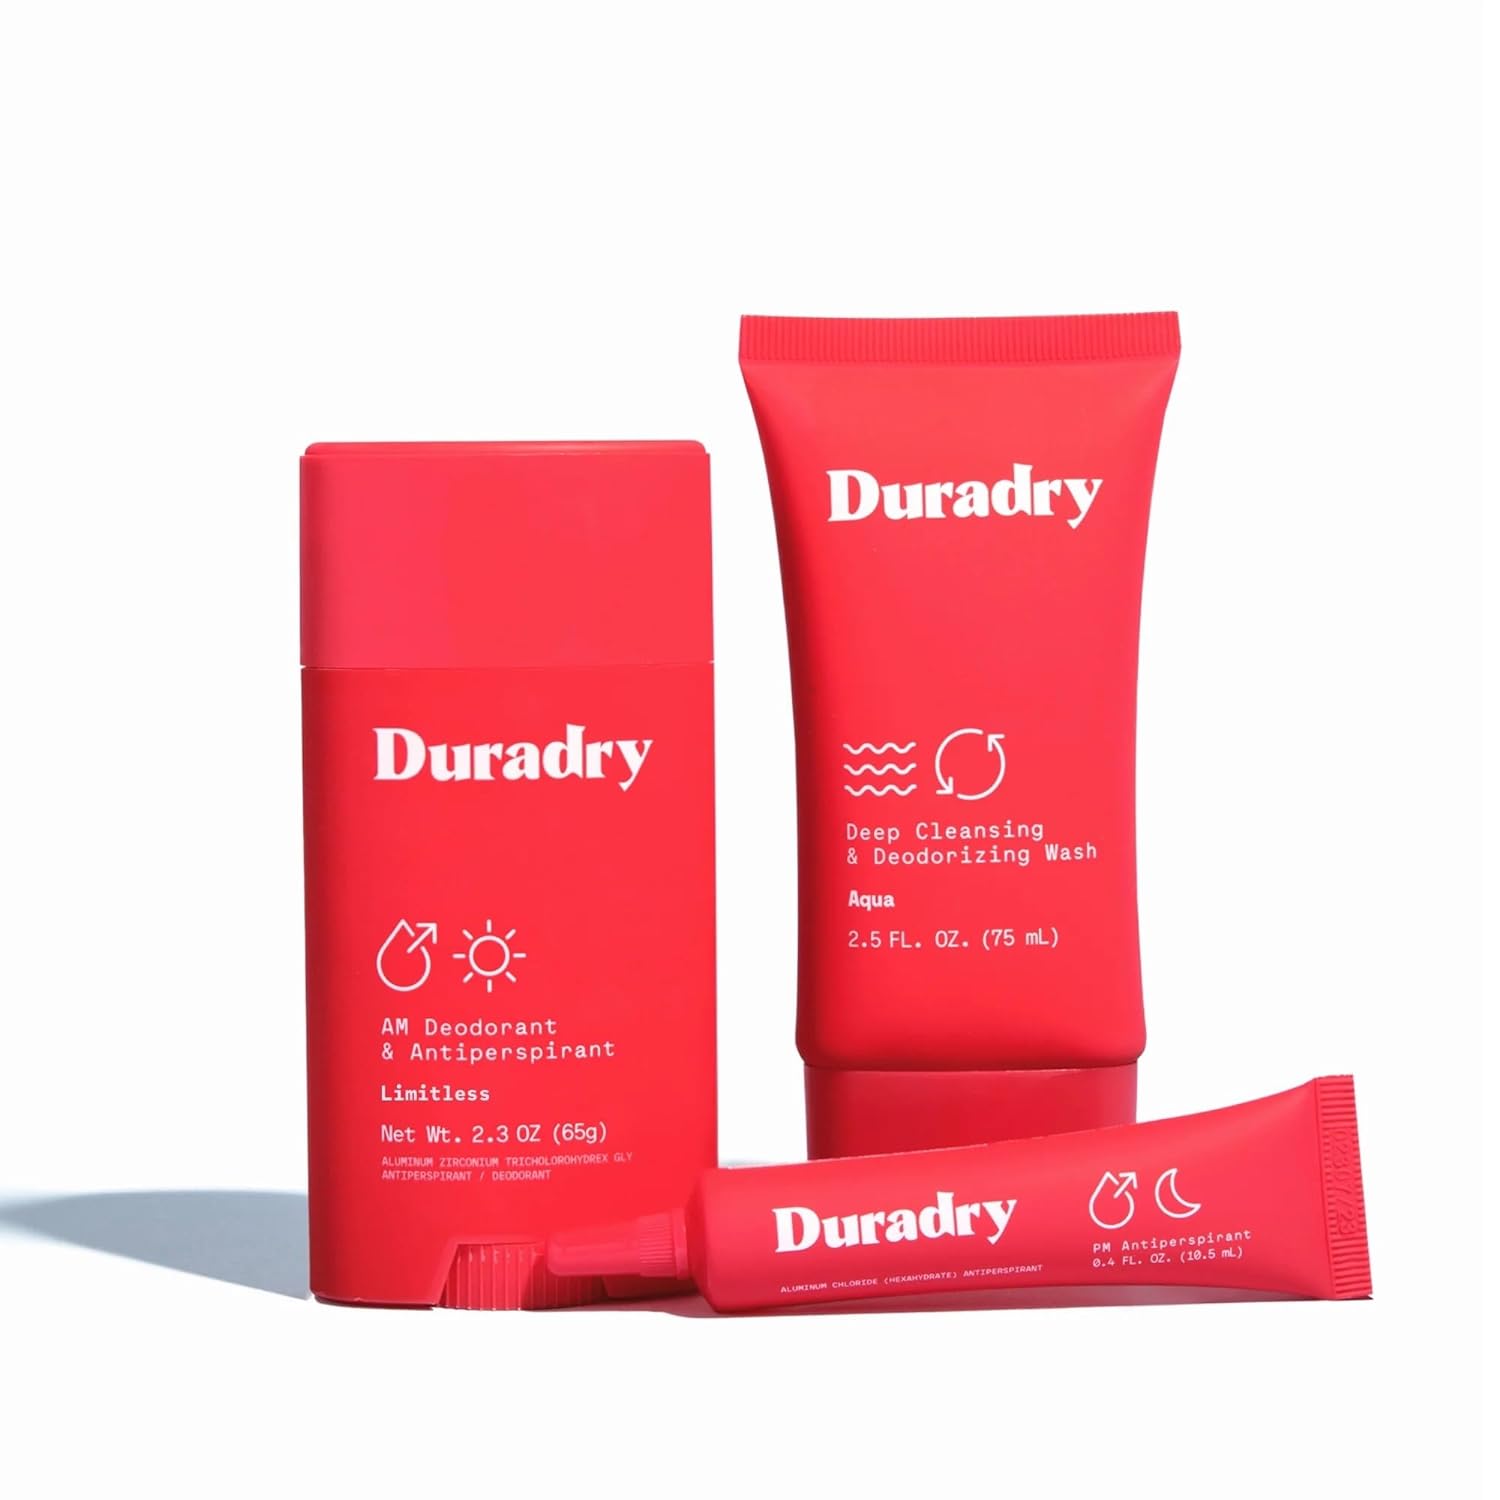 Duradry 3-Step Protection System - AM Deodorant, PM Antiperspirant Gel, Deep Cleansing & Deodorizing Body Wash, Prescription Strength, Excessive Sweating, Hyperhidrosis, Block Sweat & Odor - Limitless